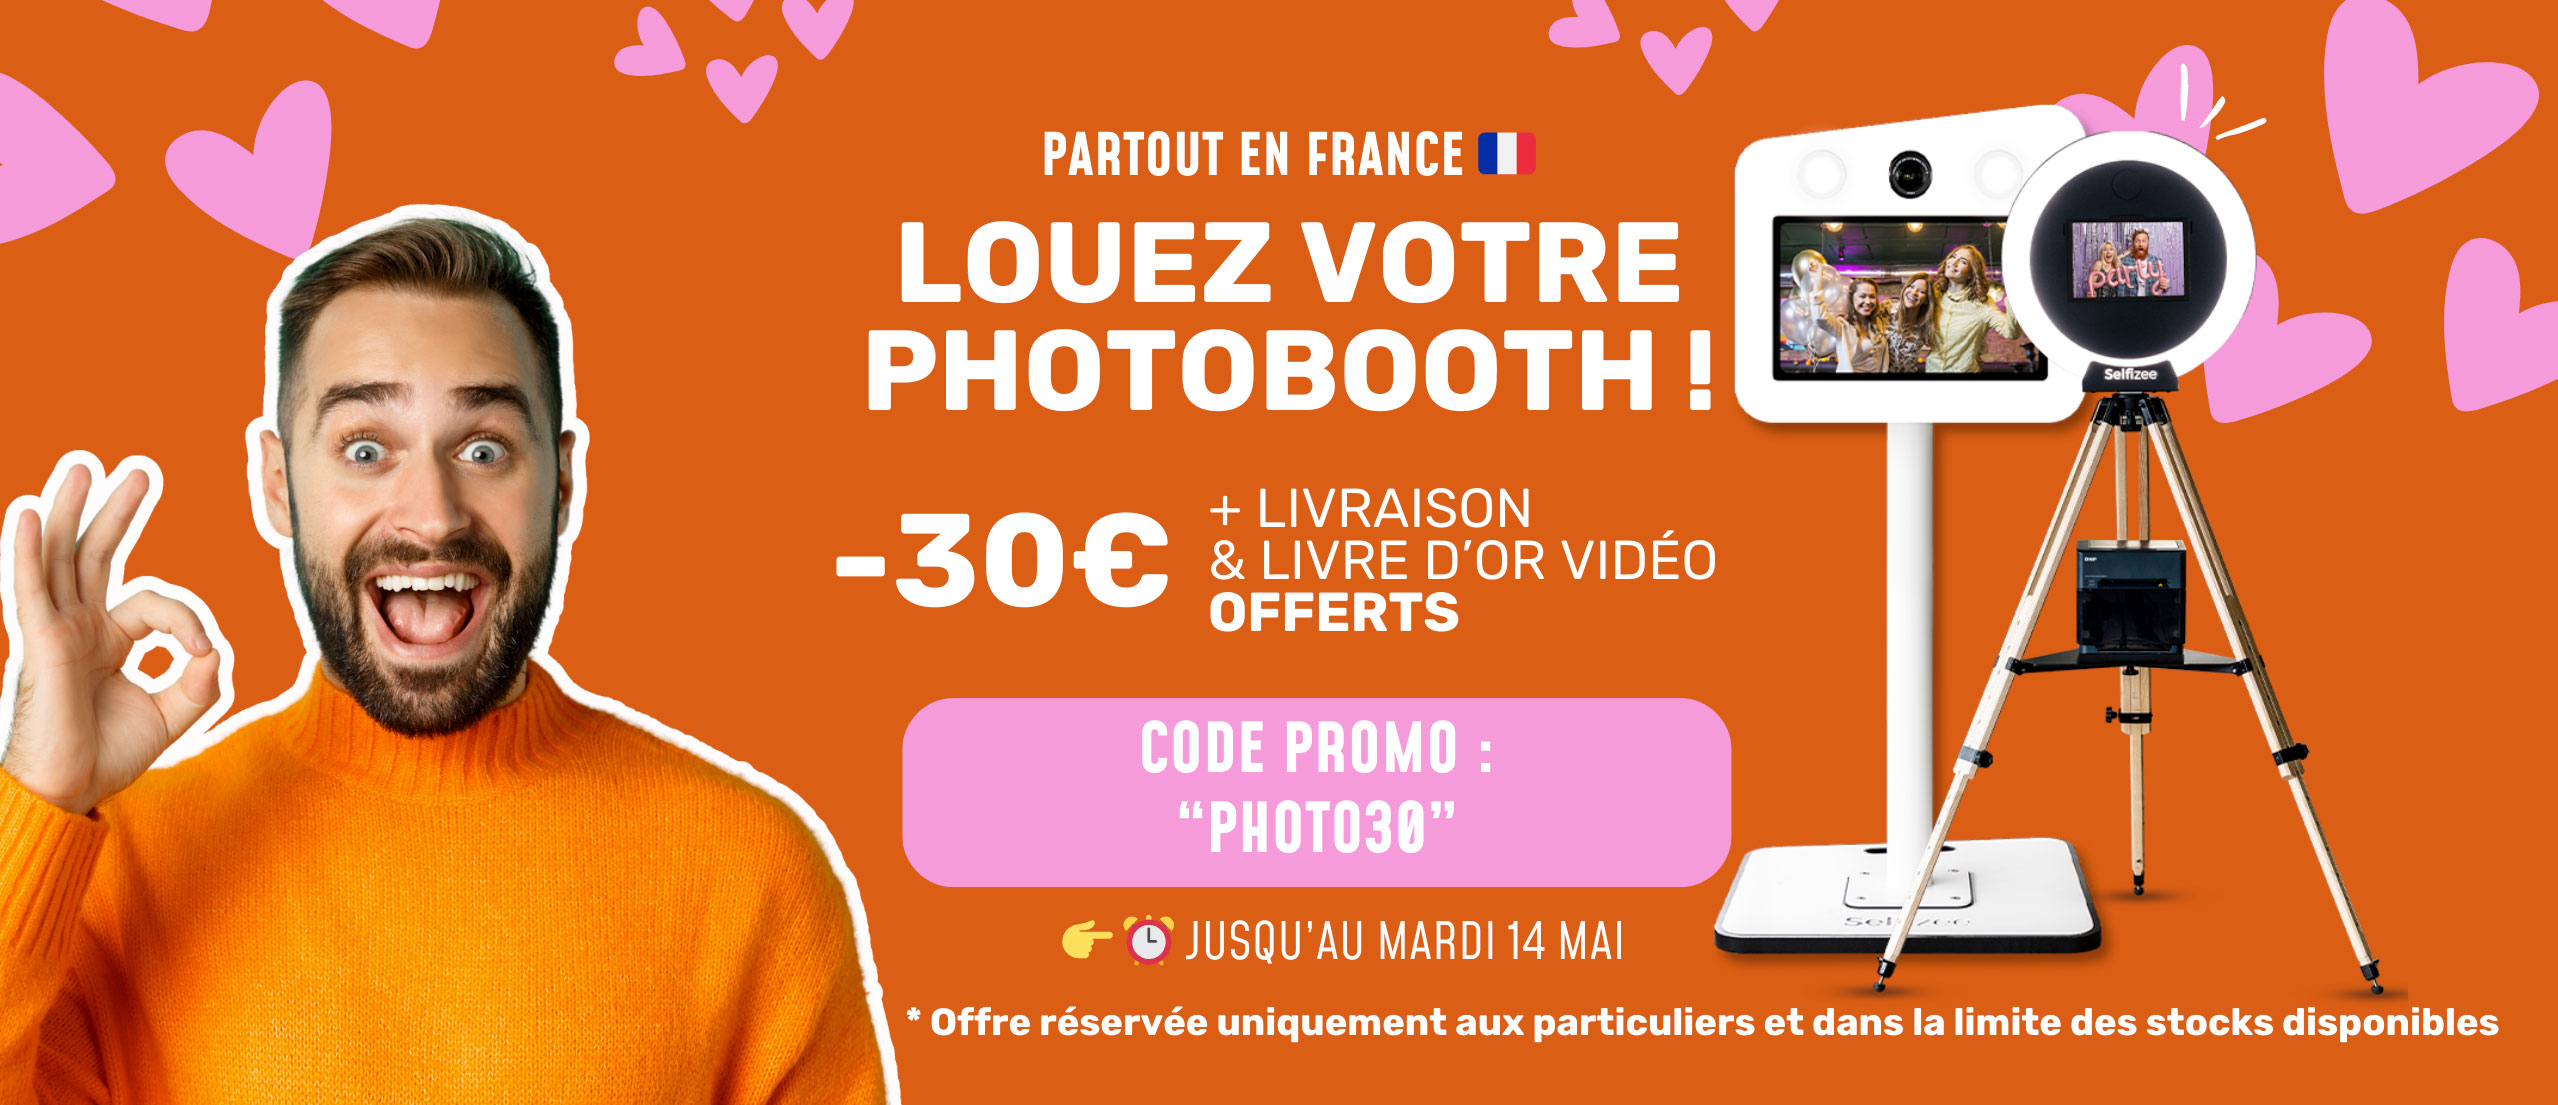 Photobooth promotion